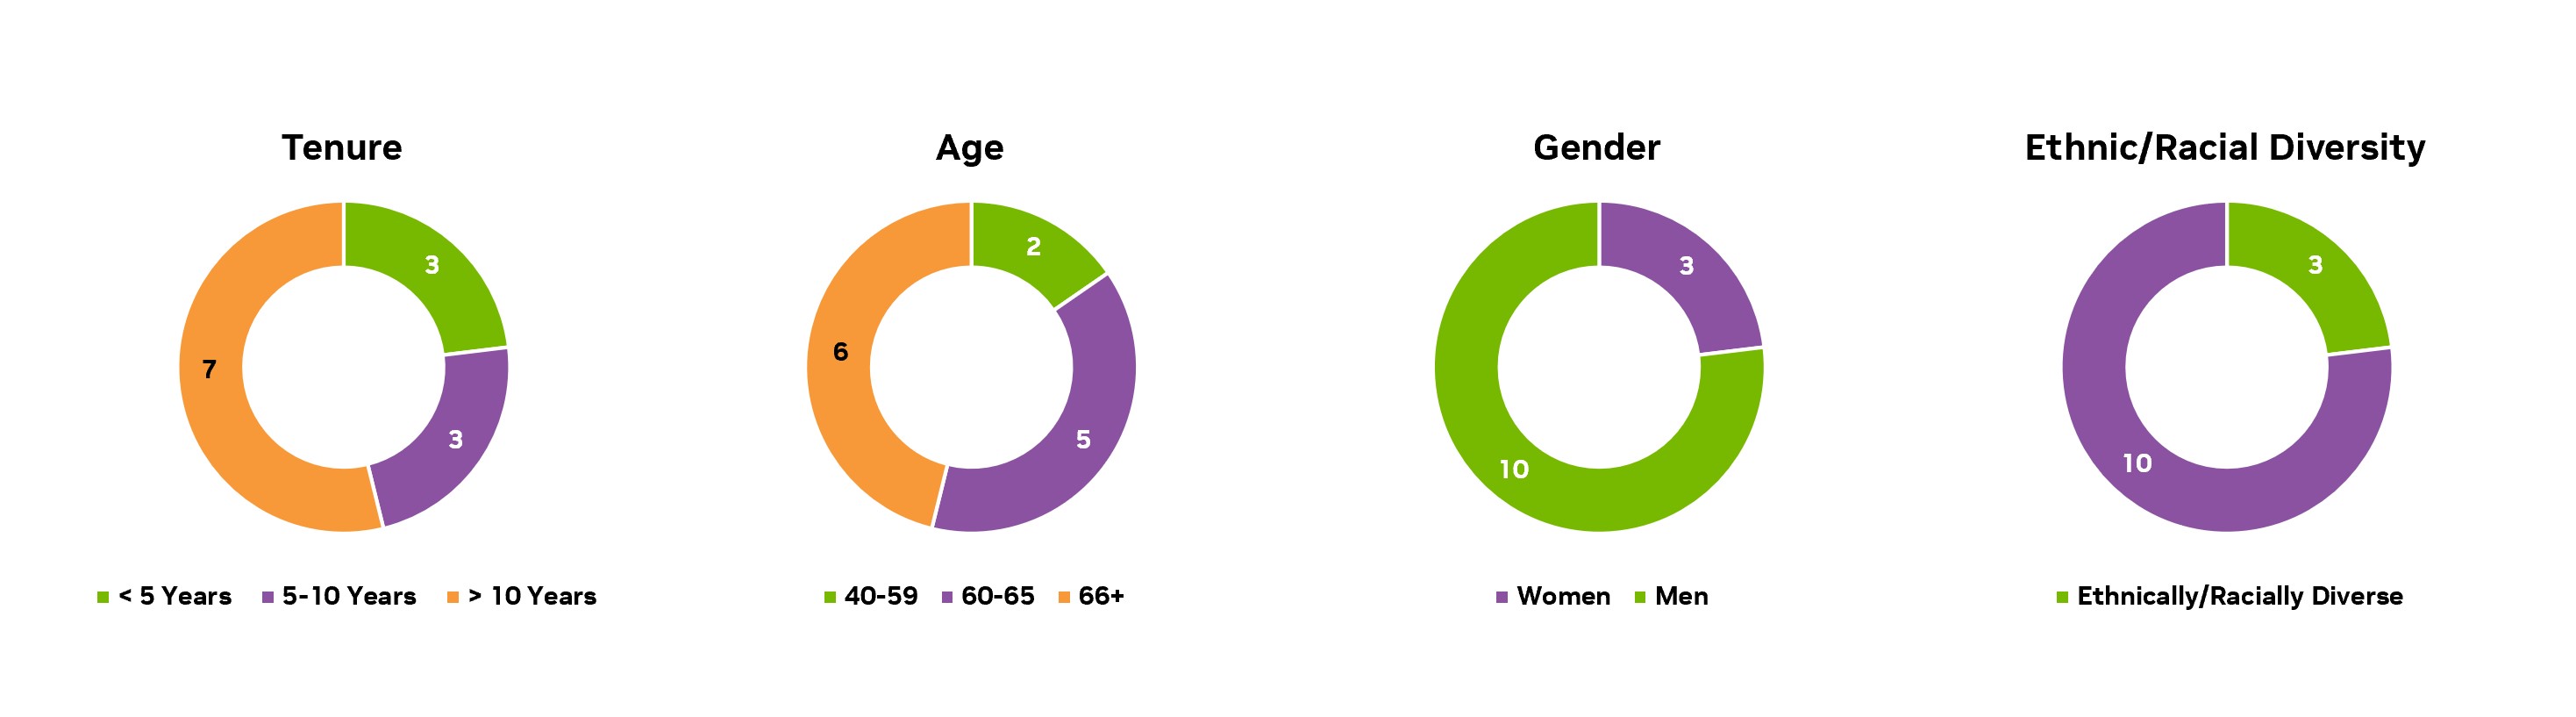 Nominee Demographics (color).jpg